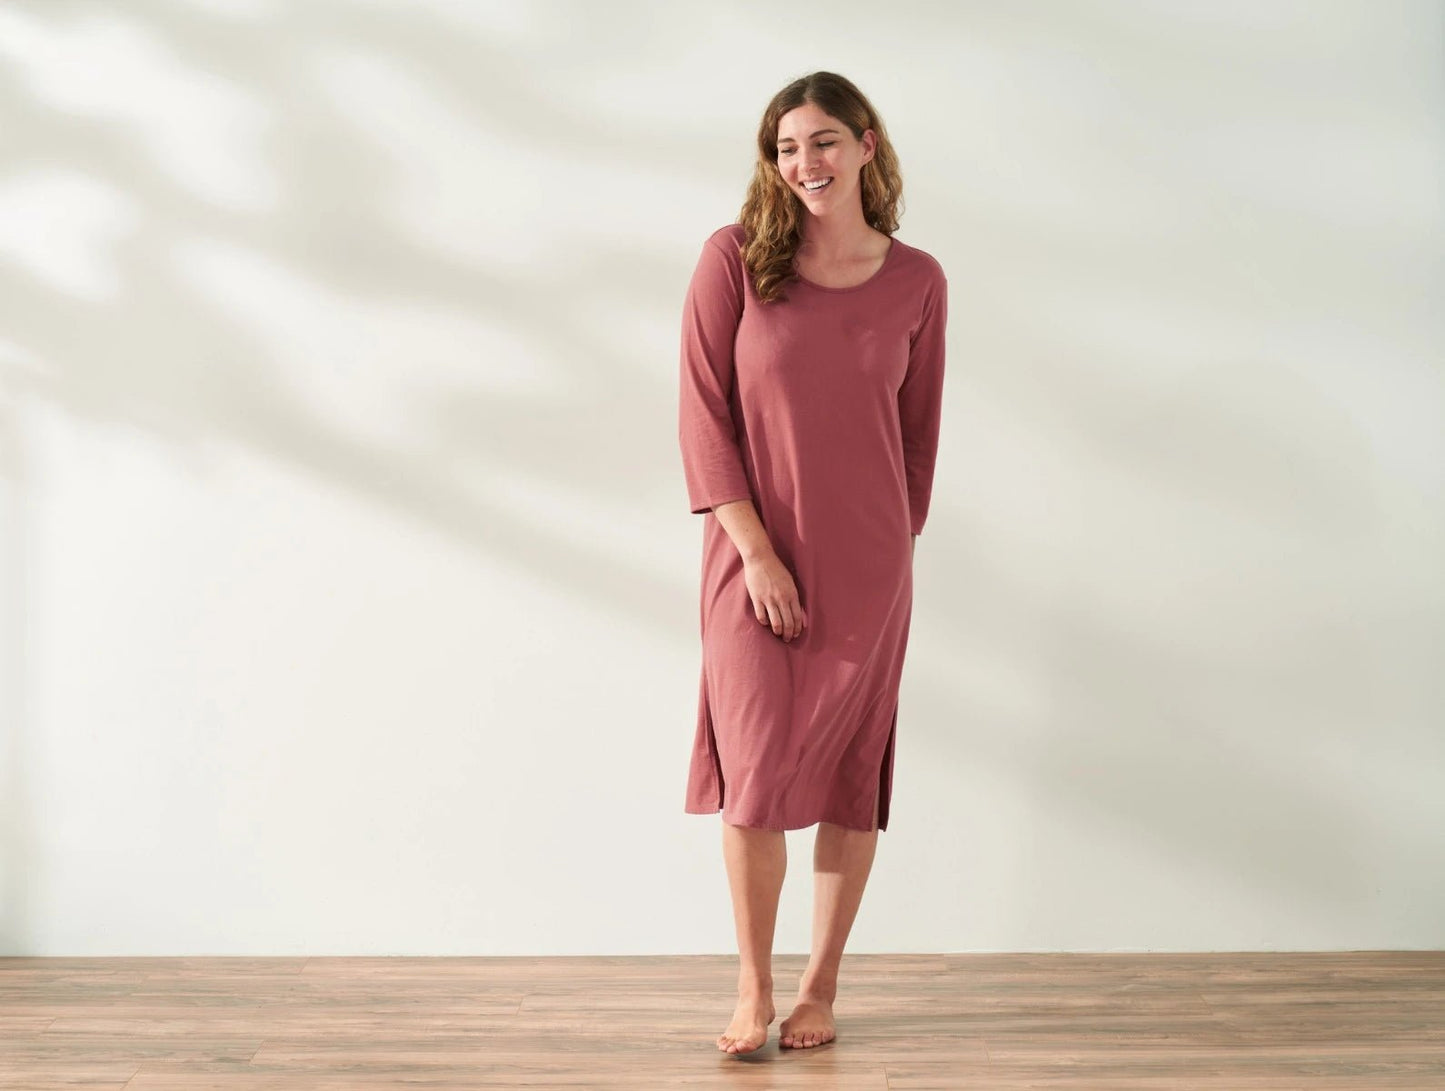 Women's Solstice Organic Nightgown